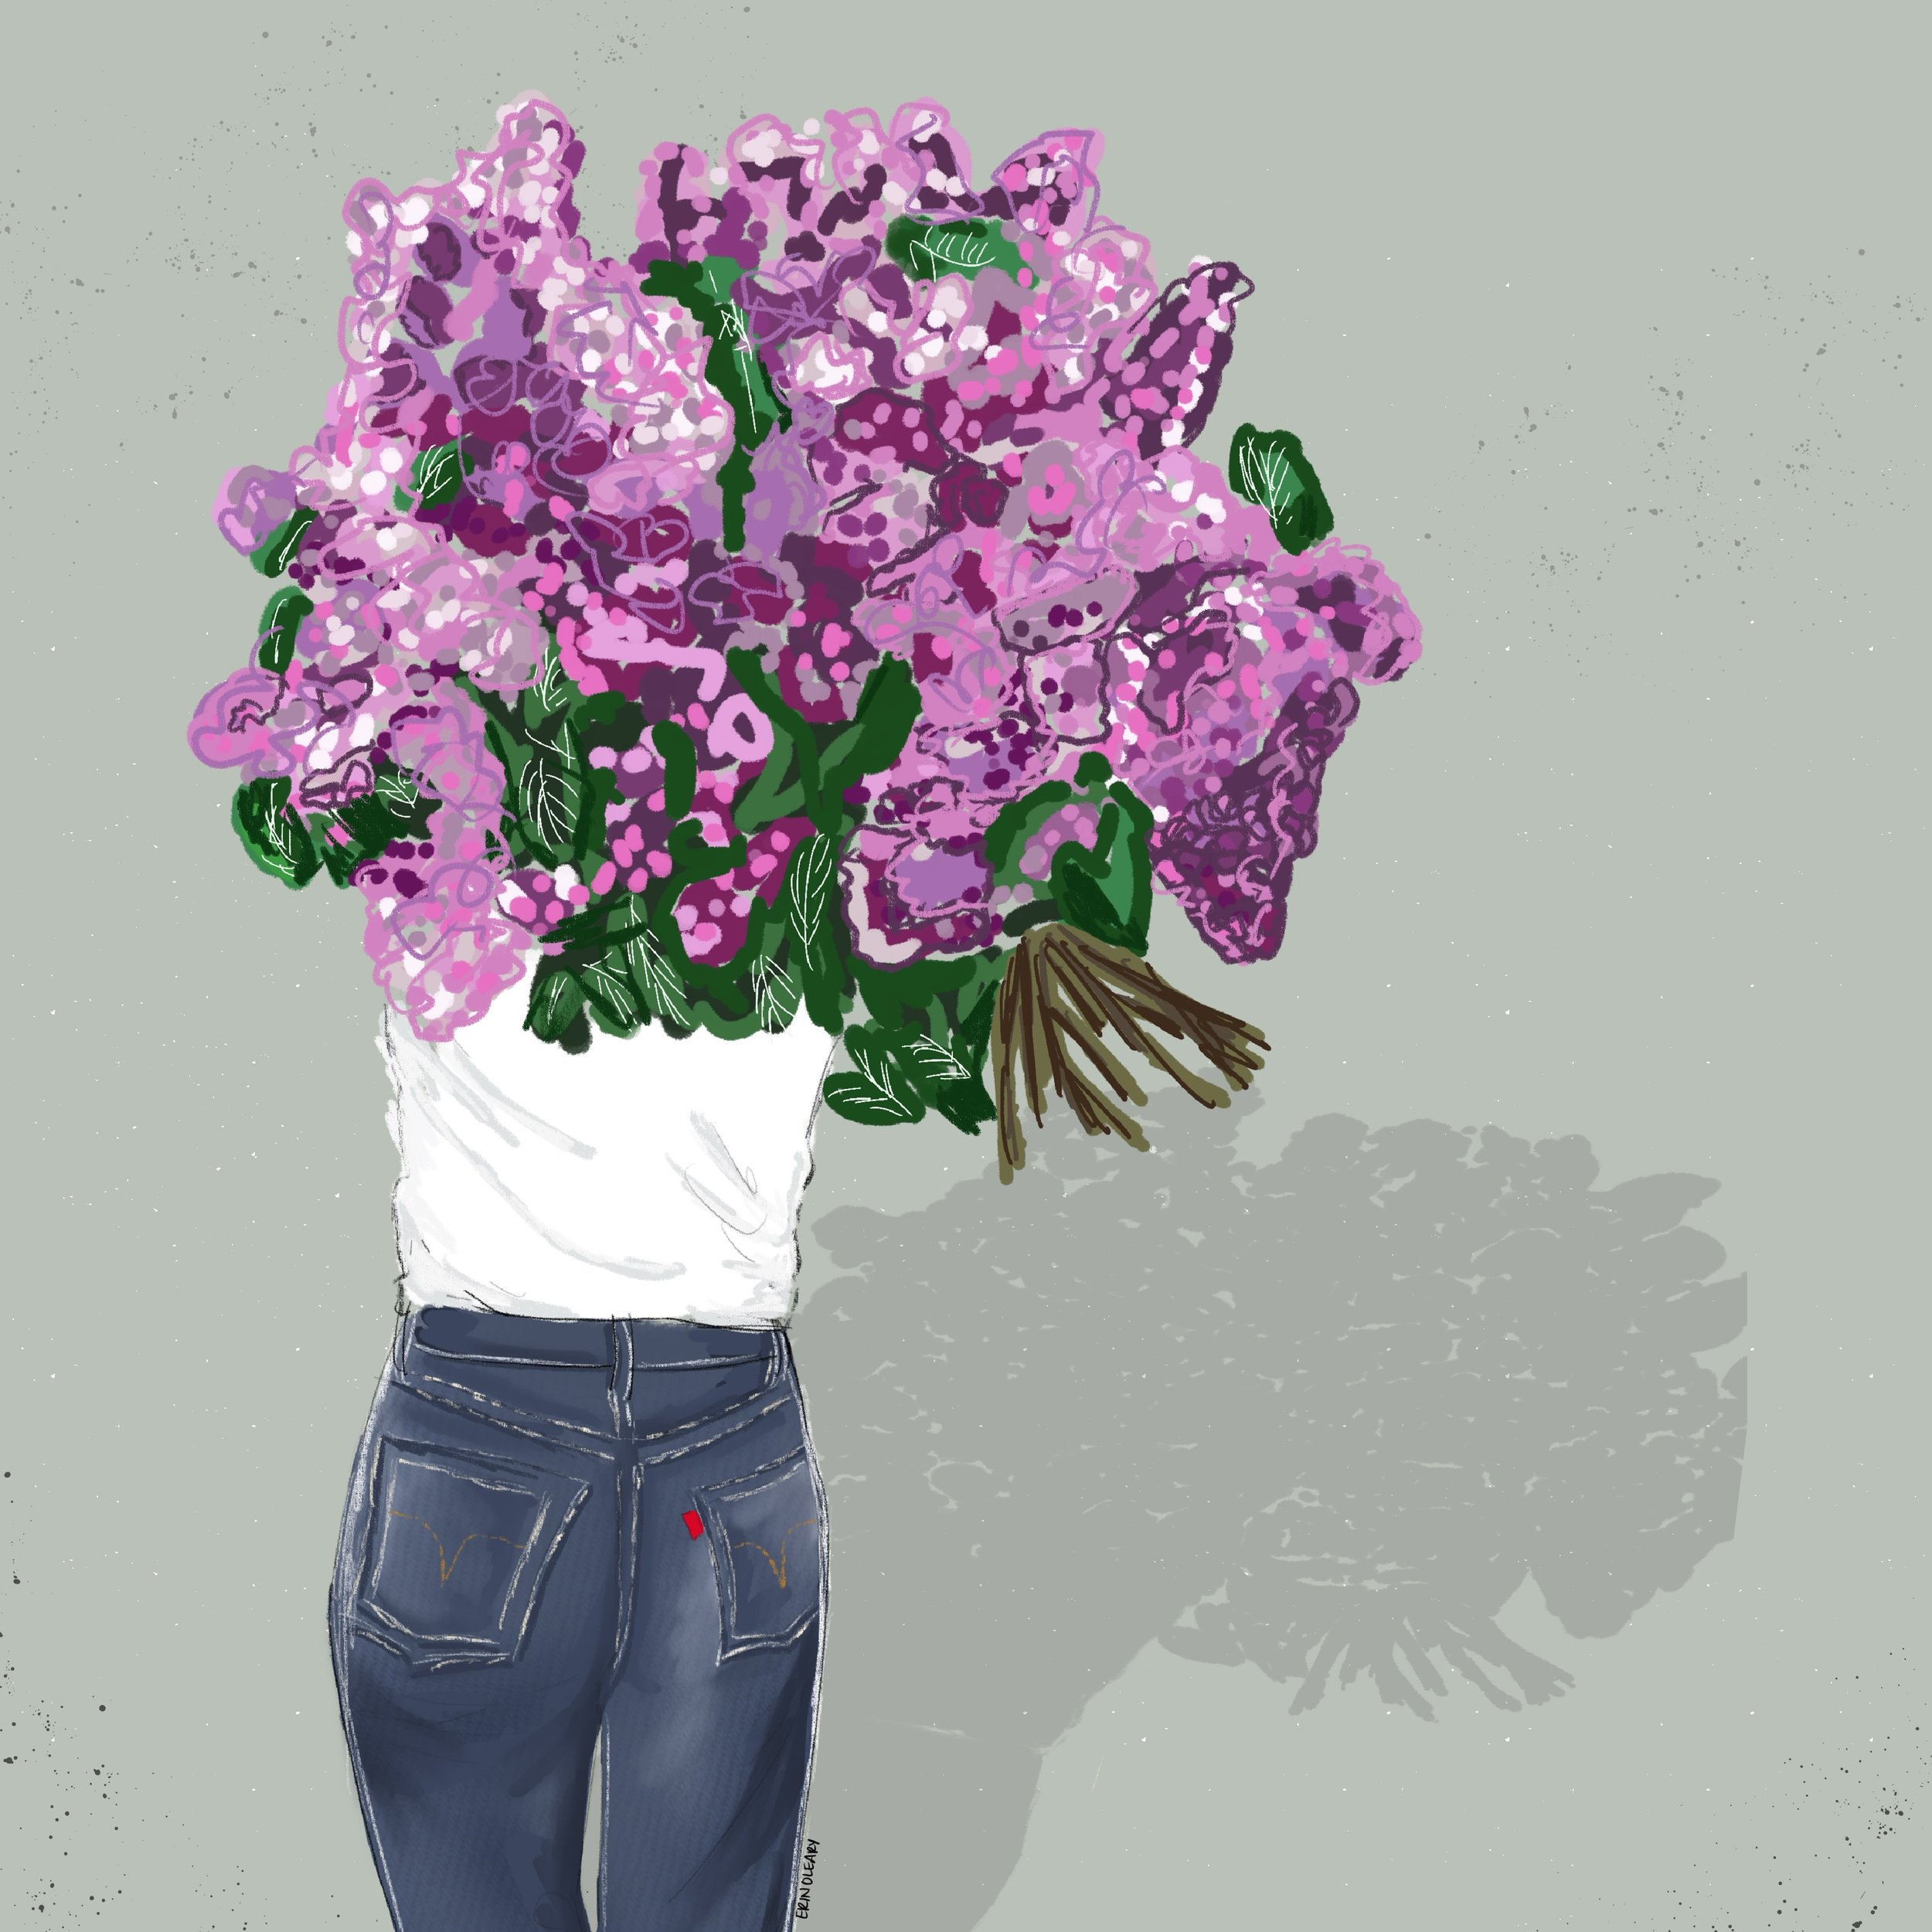 Lilac season is my favorite season 💜 #denimandinkdesign #lilac #illustrator #bloom